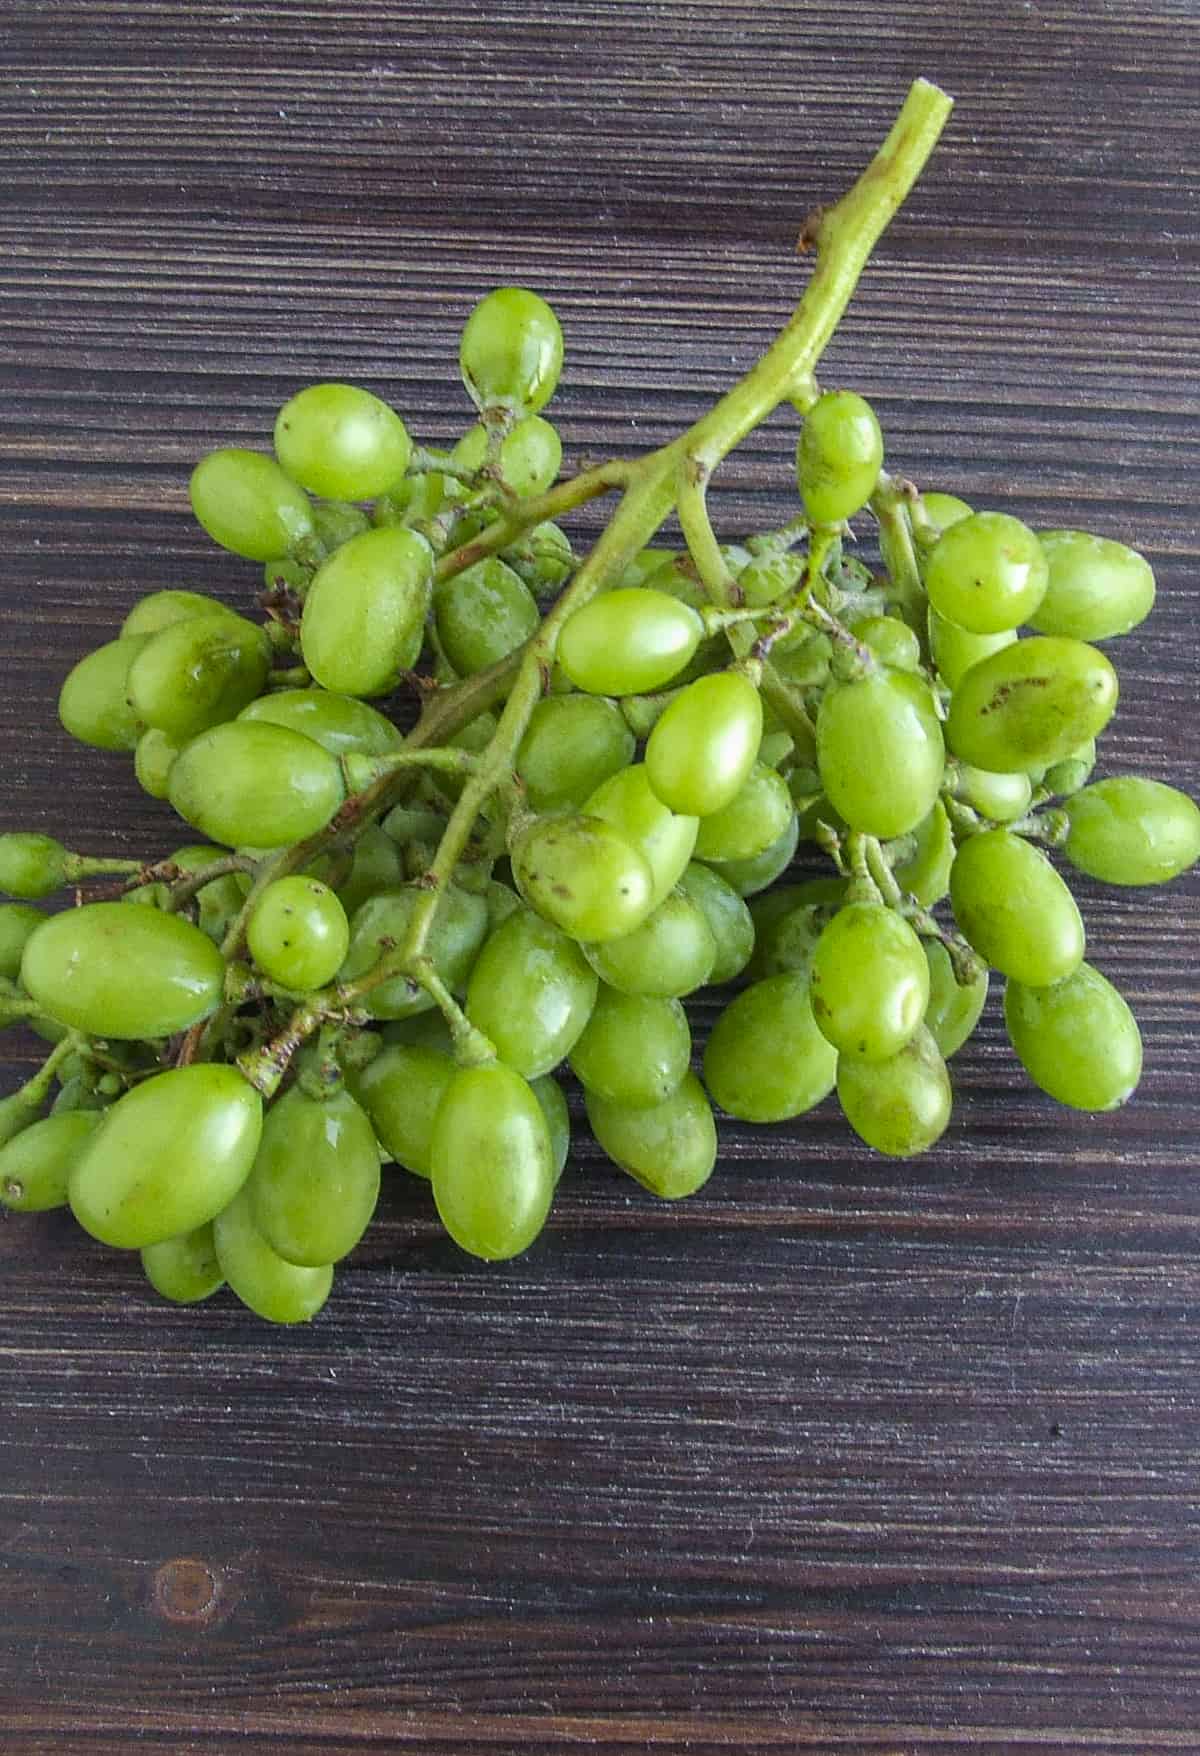 Unripe grapes on a wooden board.